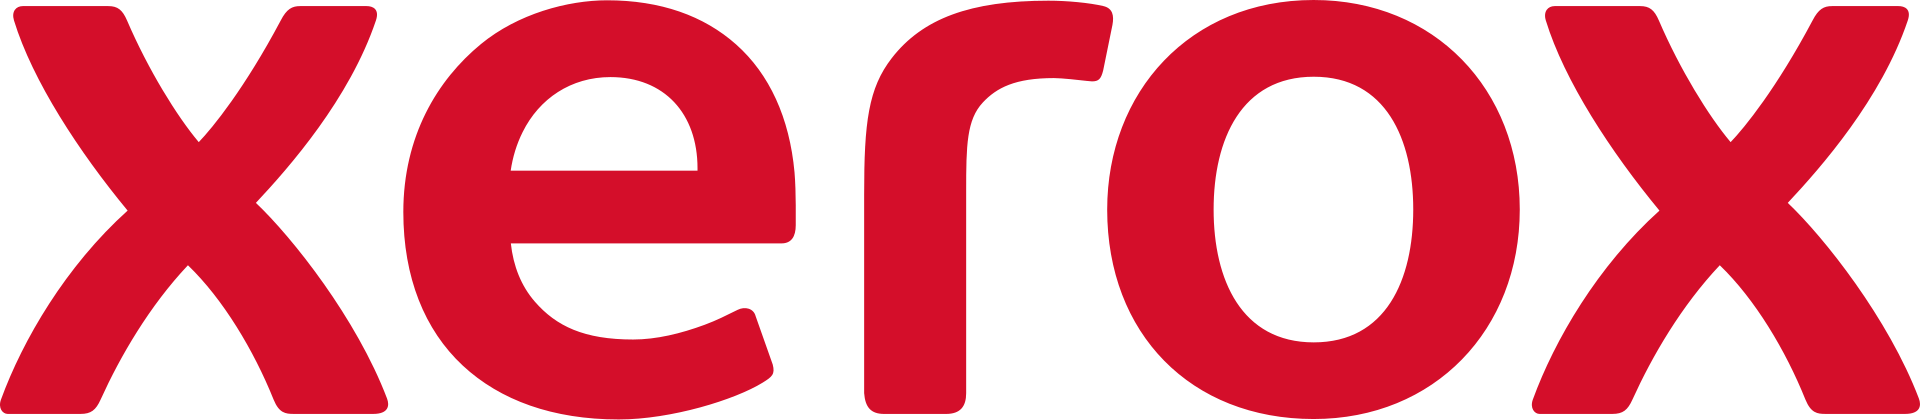 xerox-red-logo